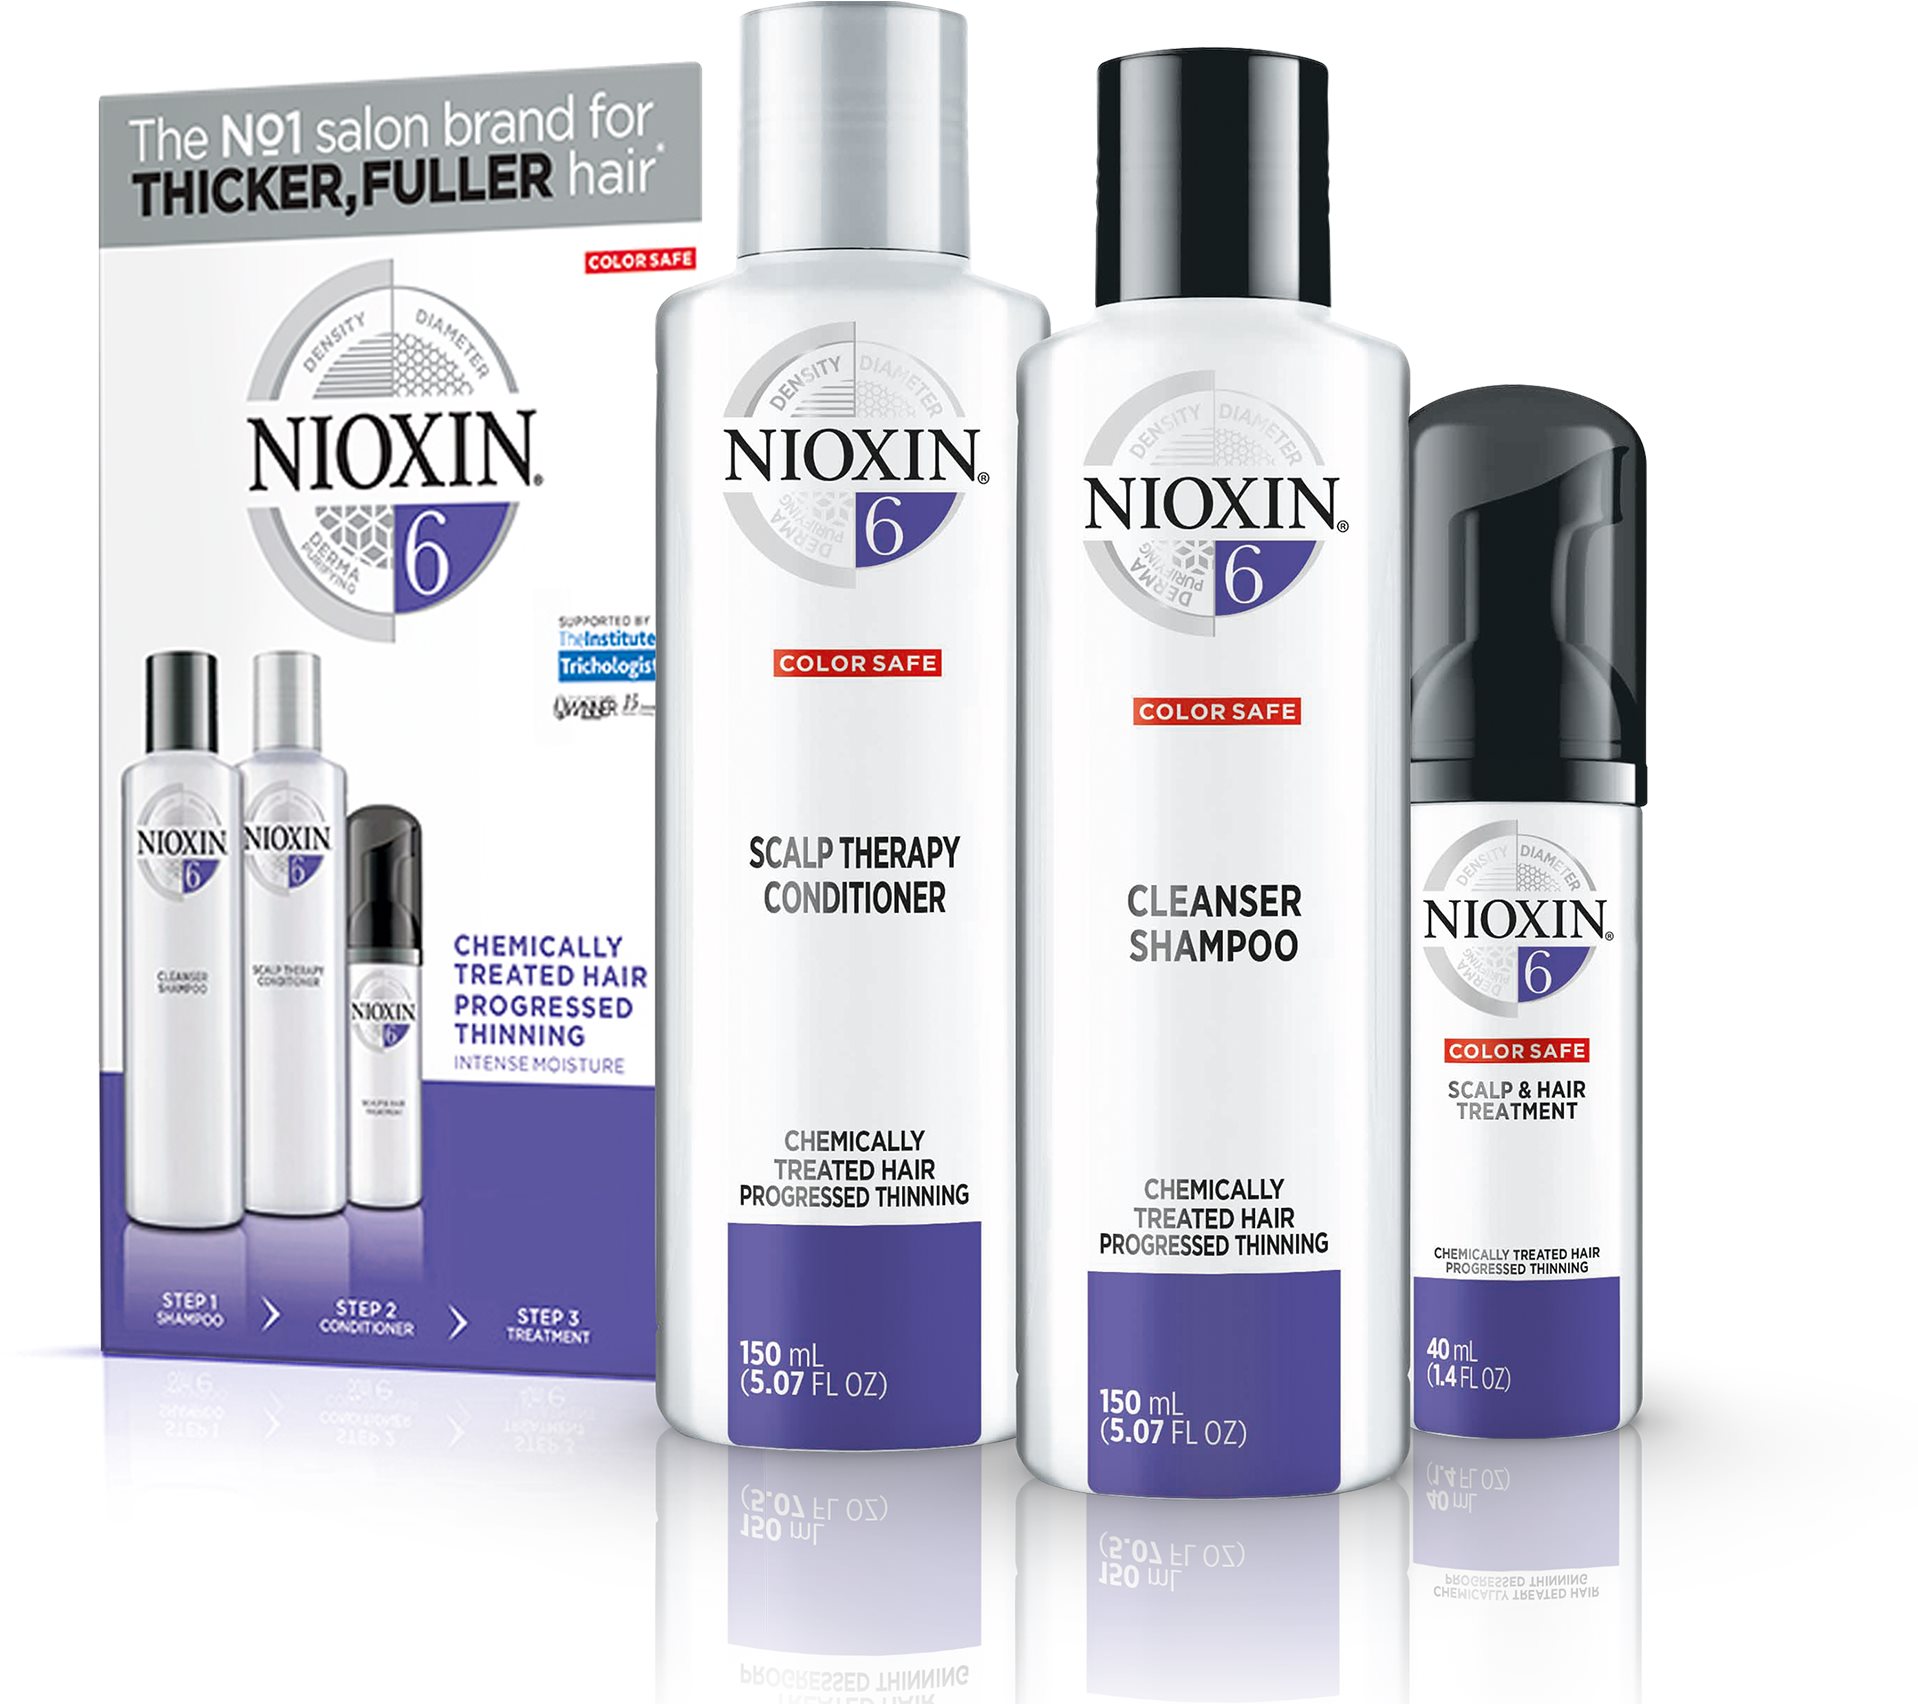 NIOXIN Trial Kit System 6